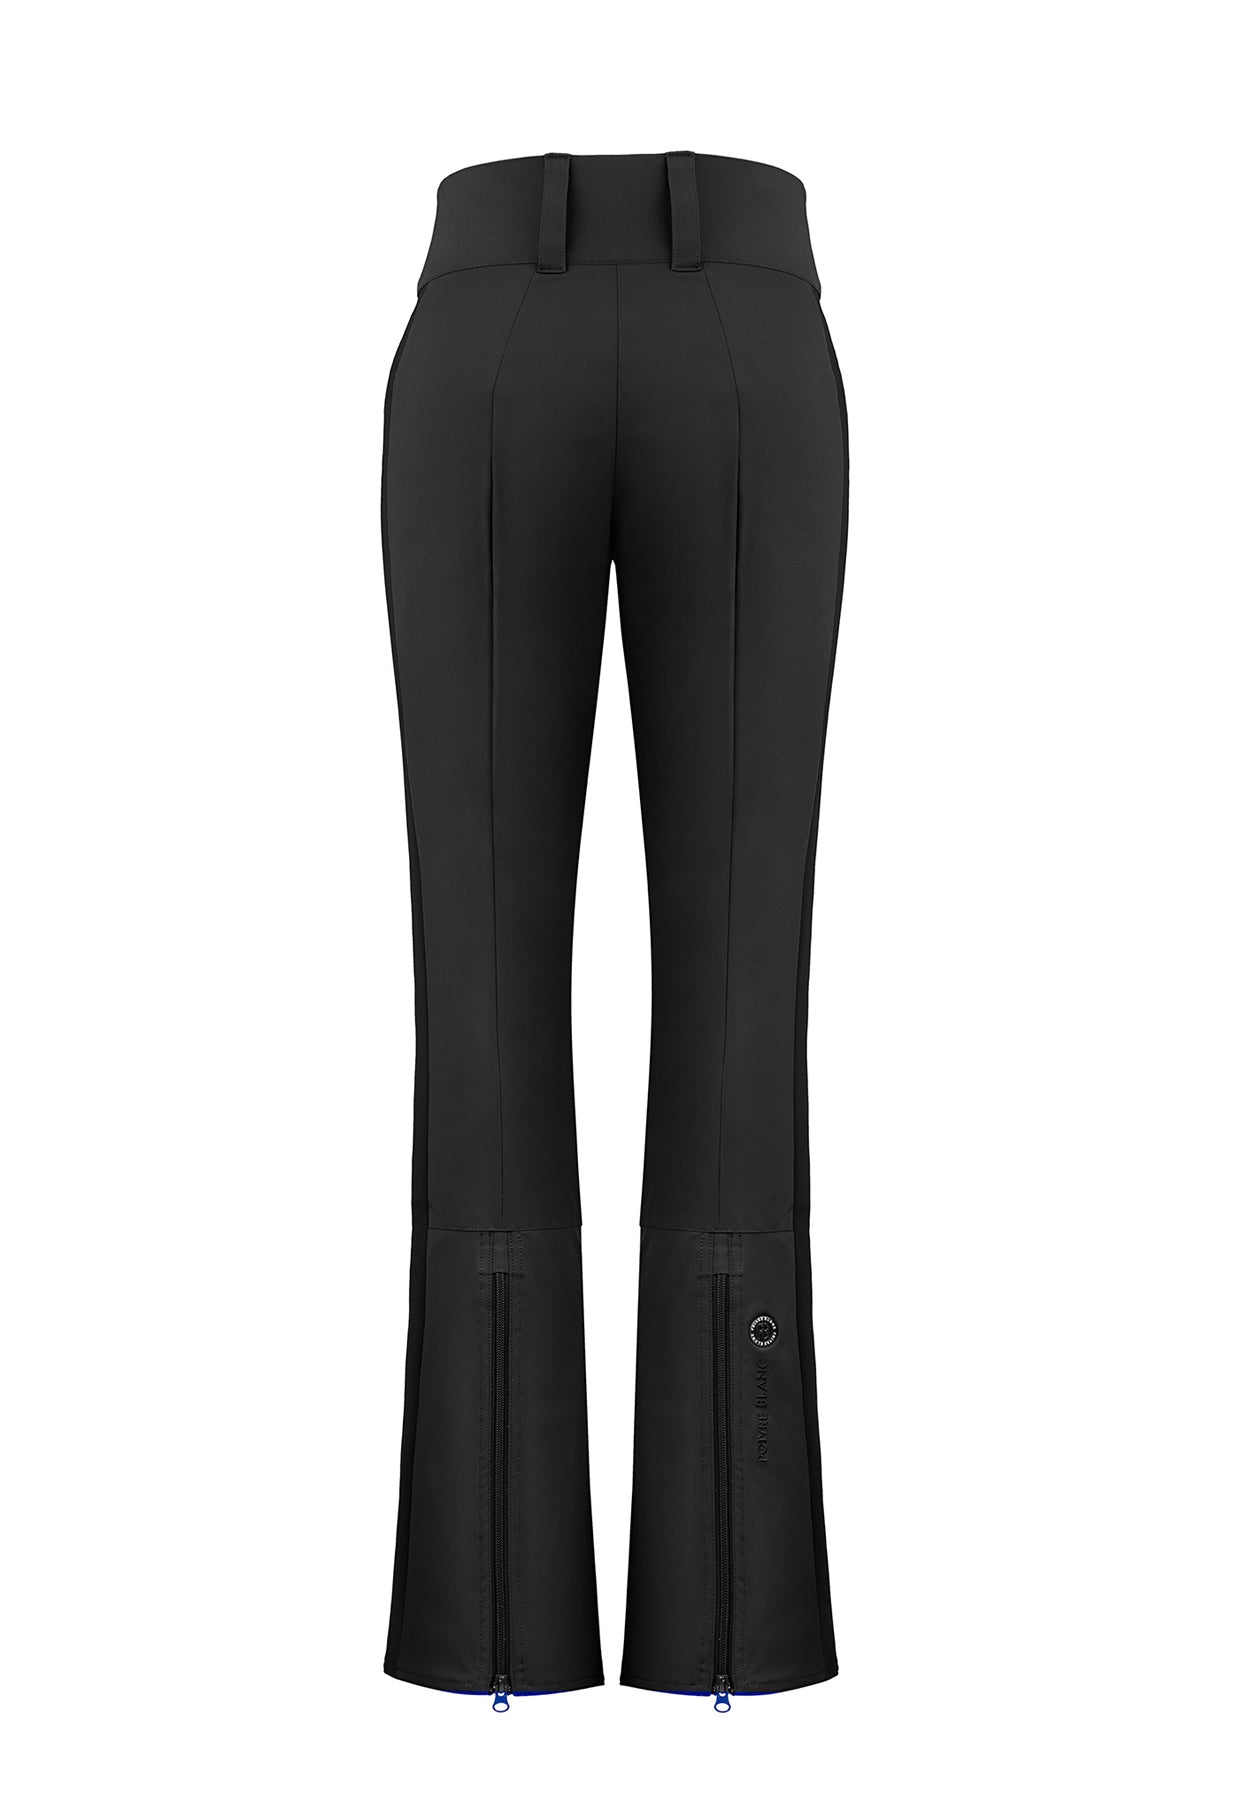 Poivre Blanc W23-0822 Shorter length Stretch Ski Pant in Black